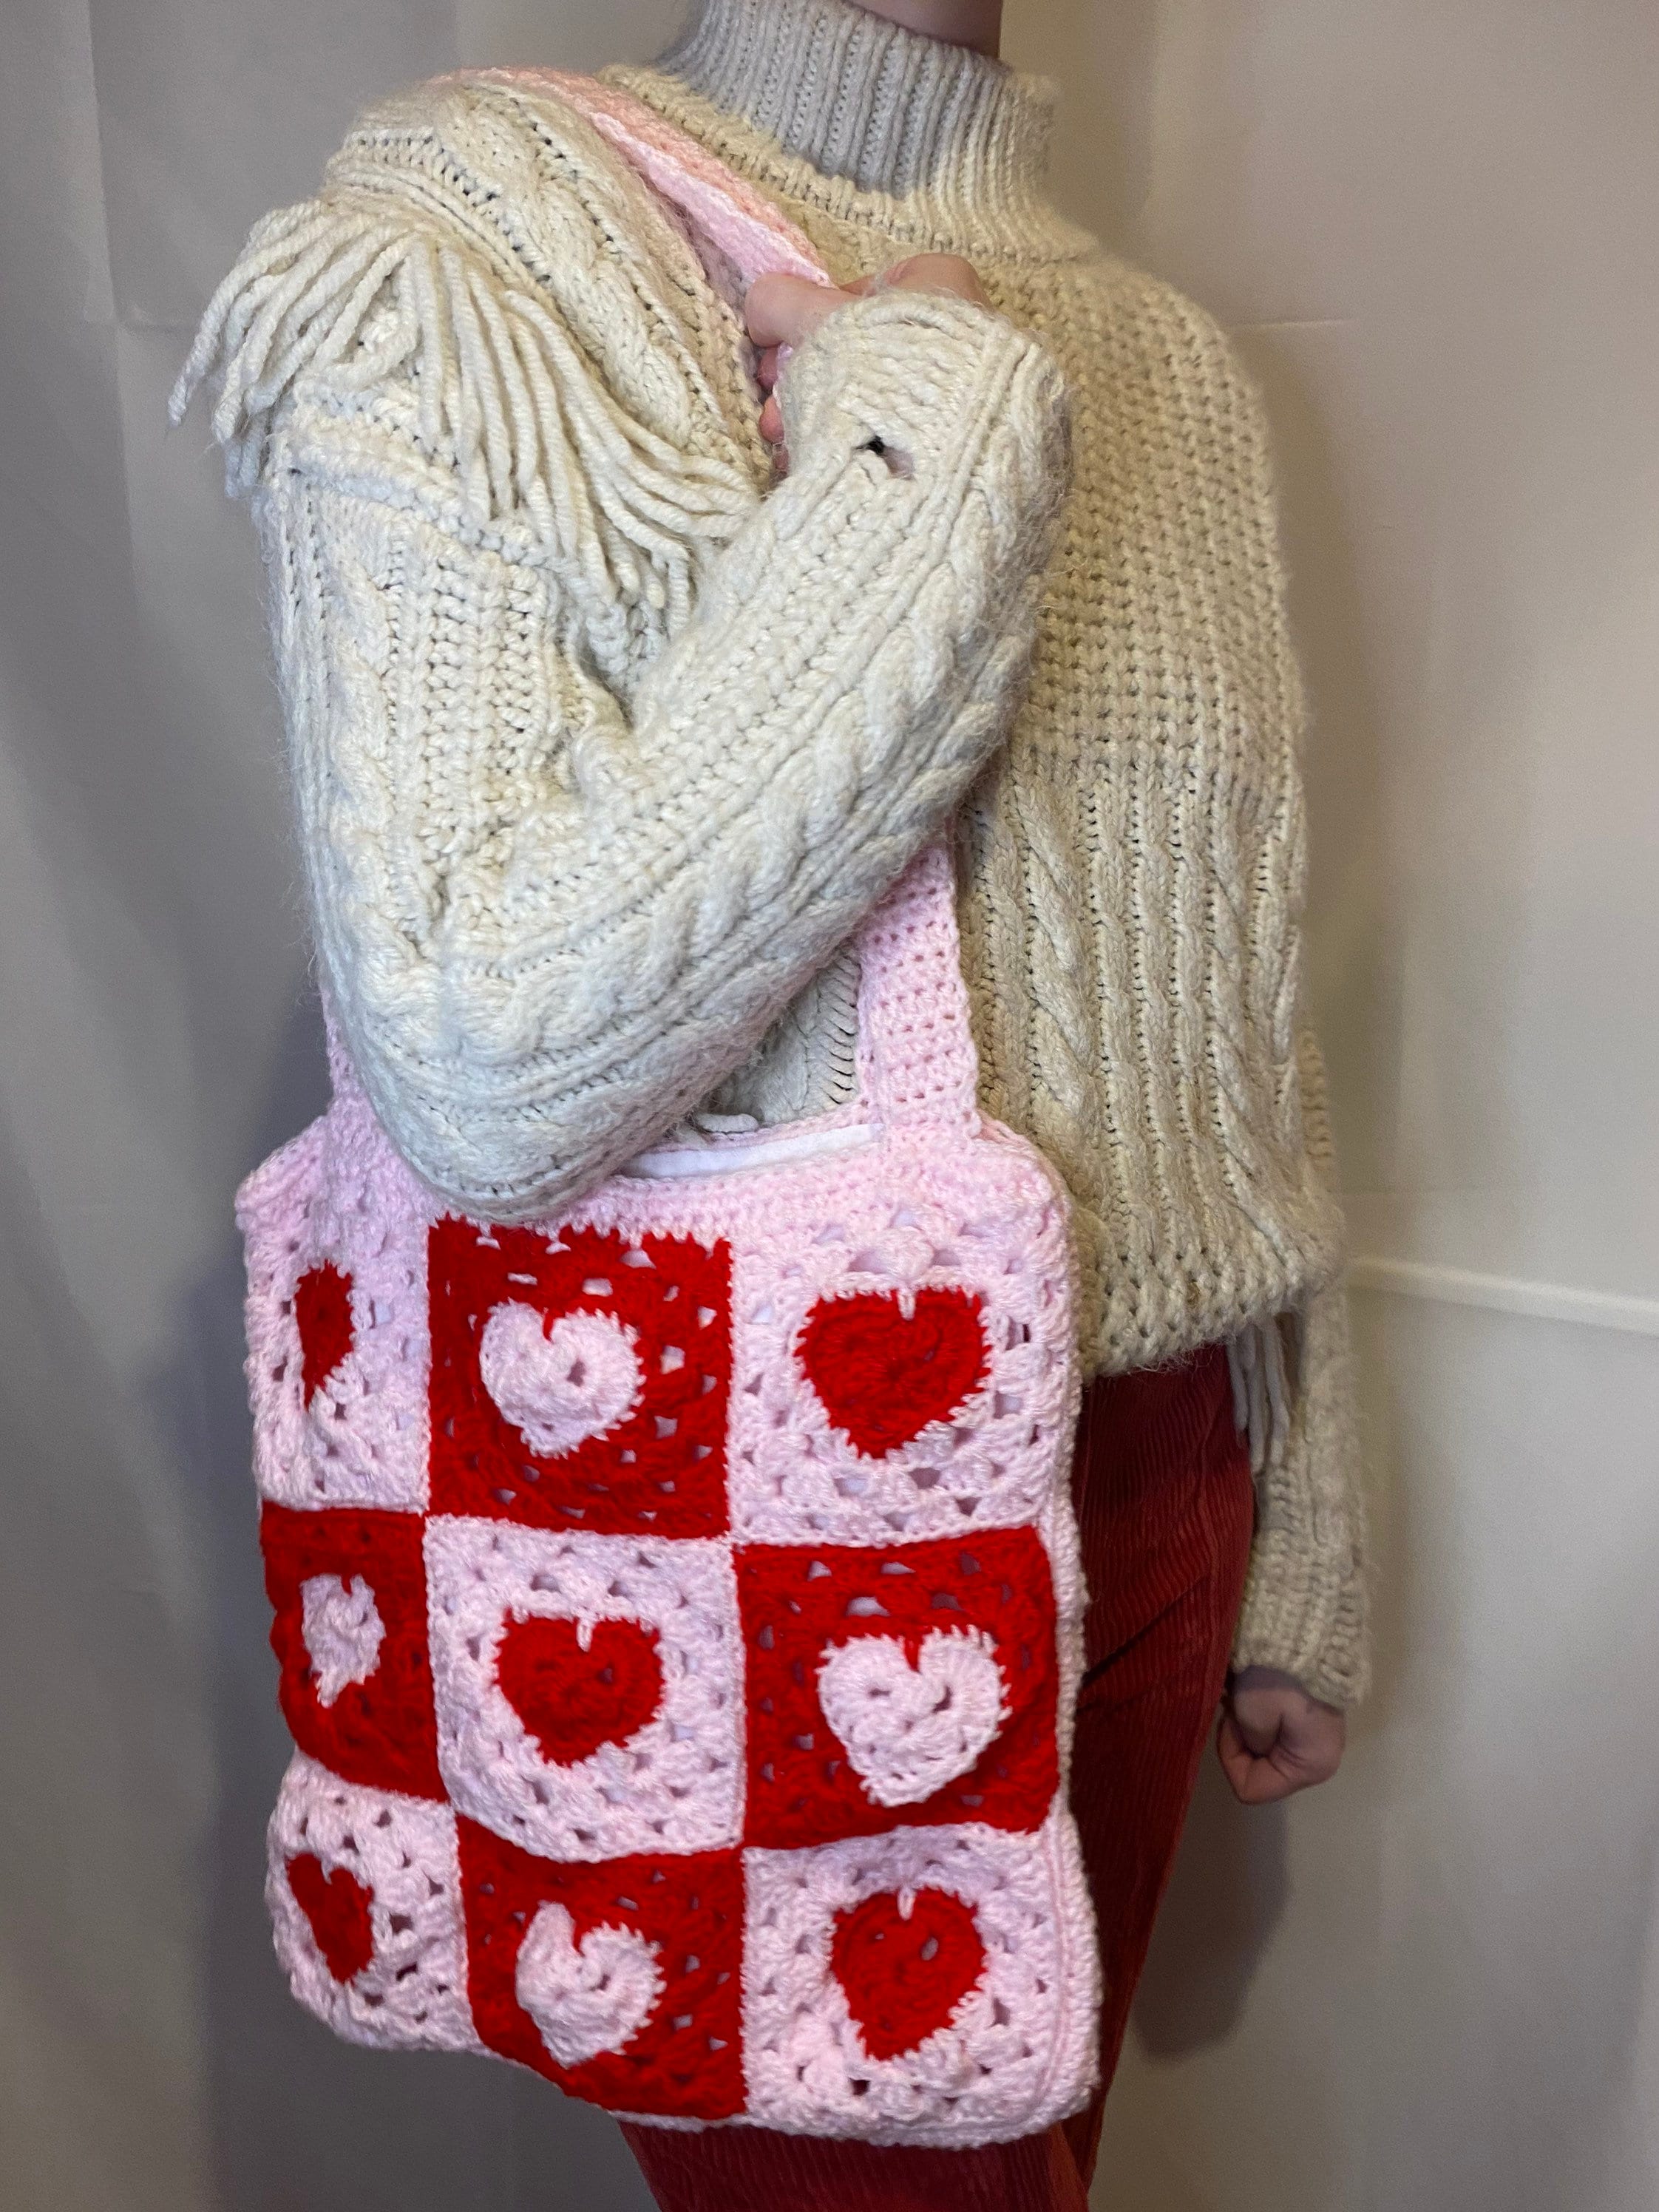 crochet heart bag ♡♡♡ #crochet #heart #crochetbag